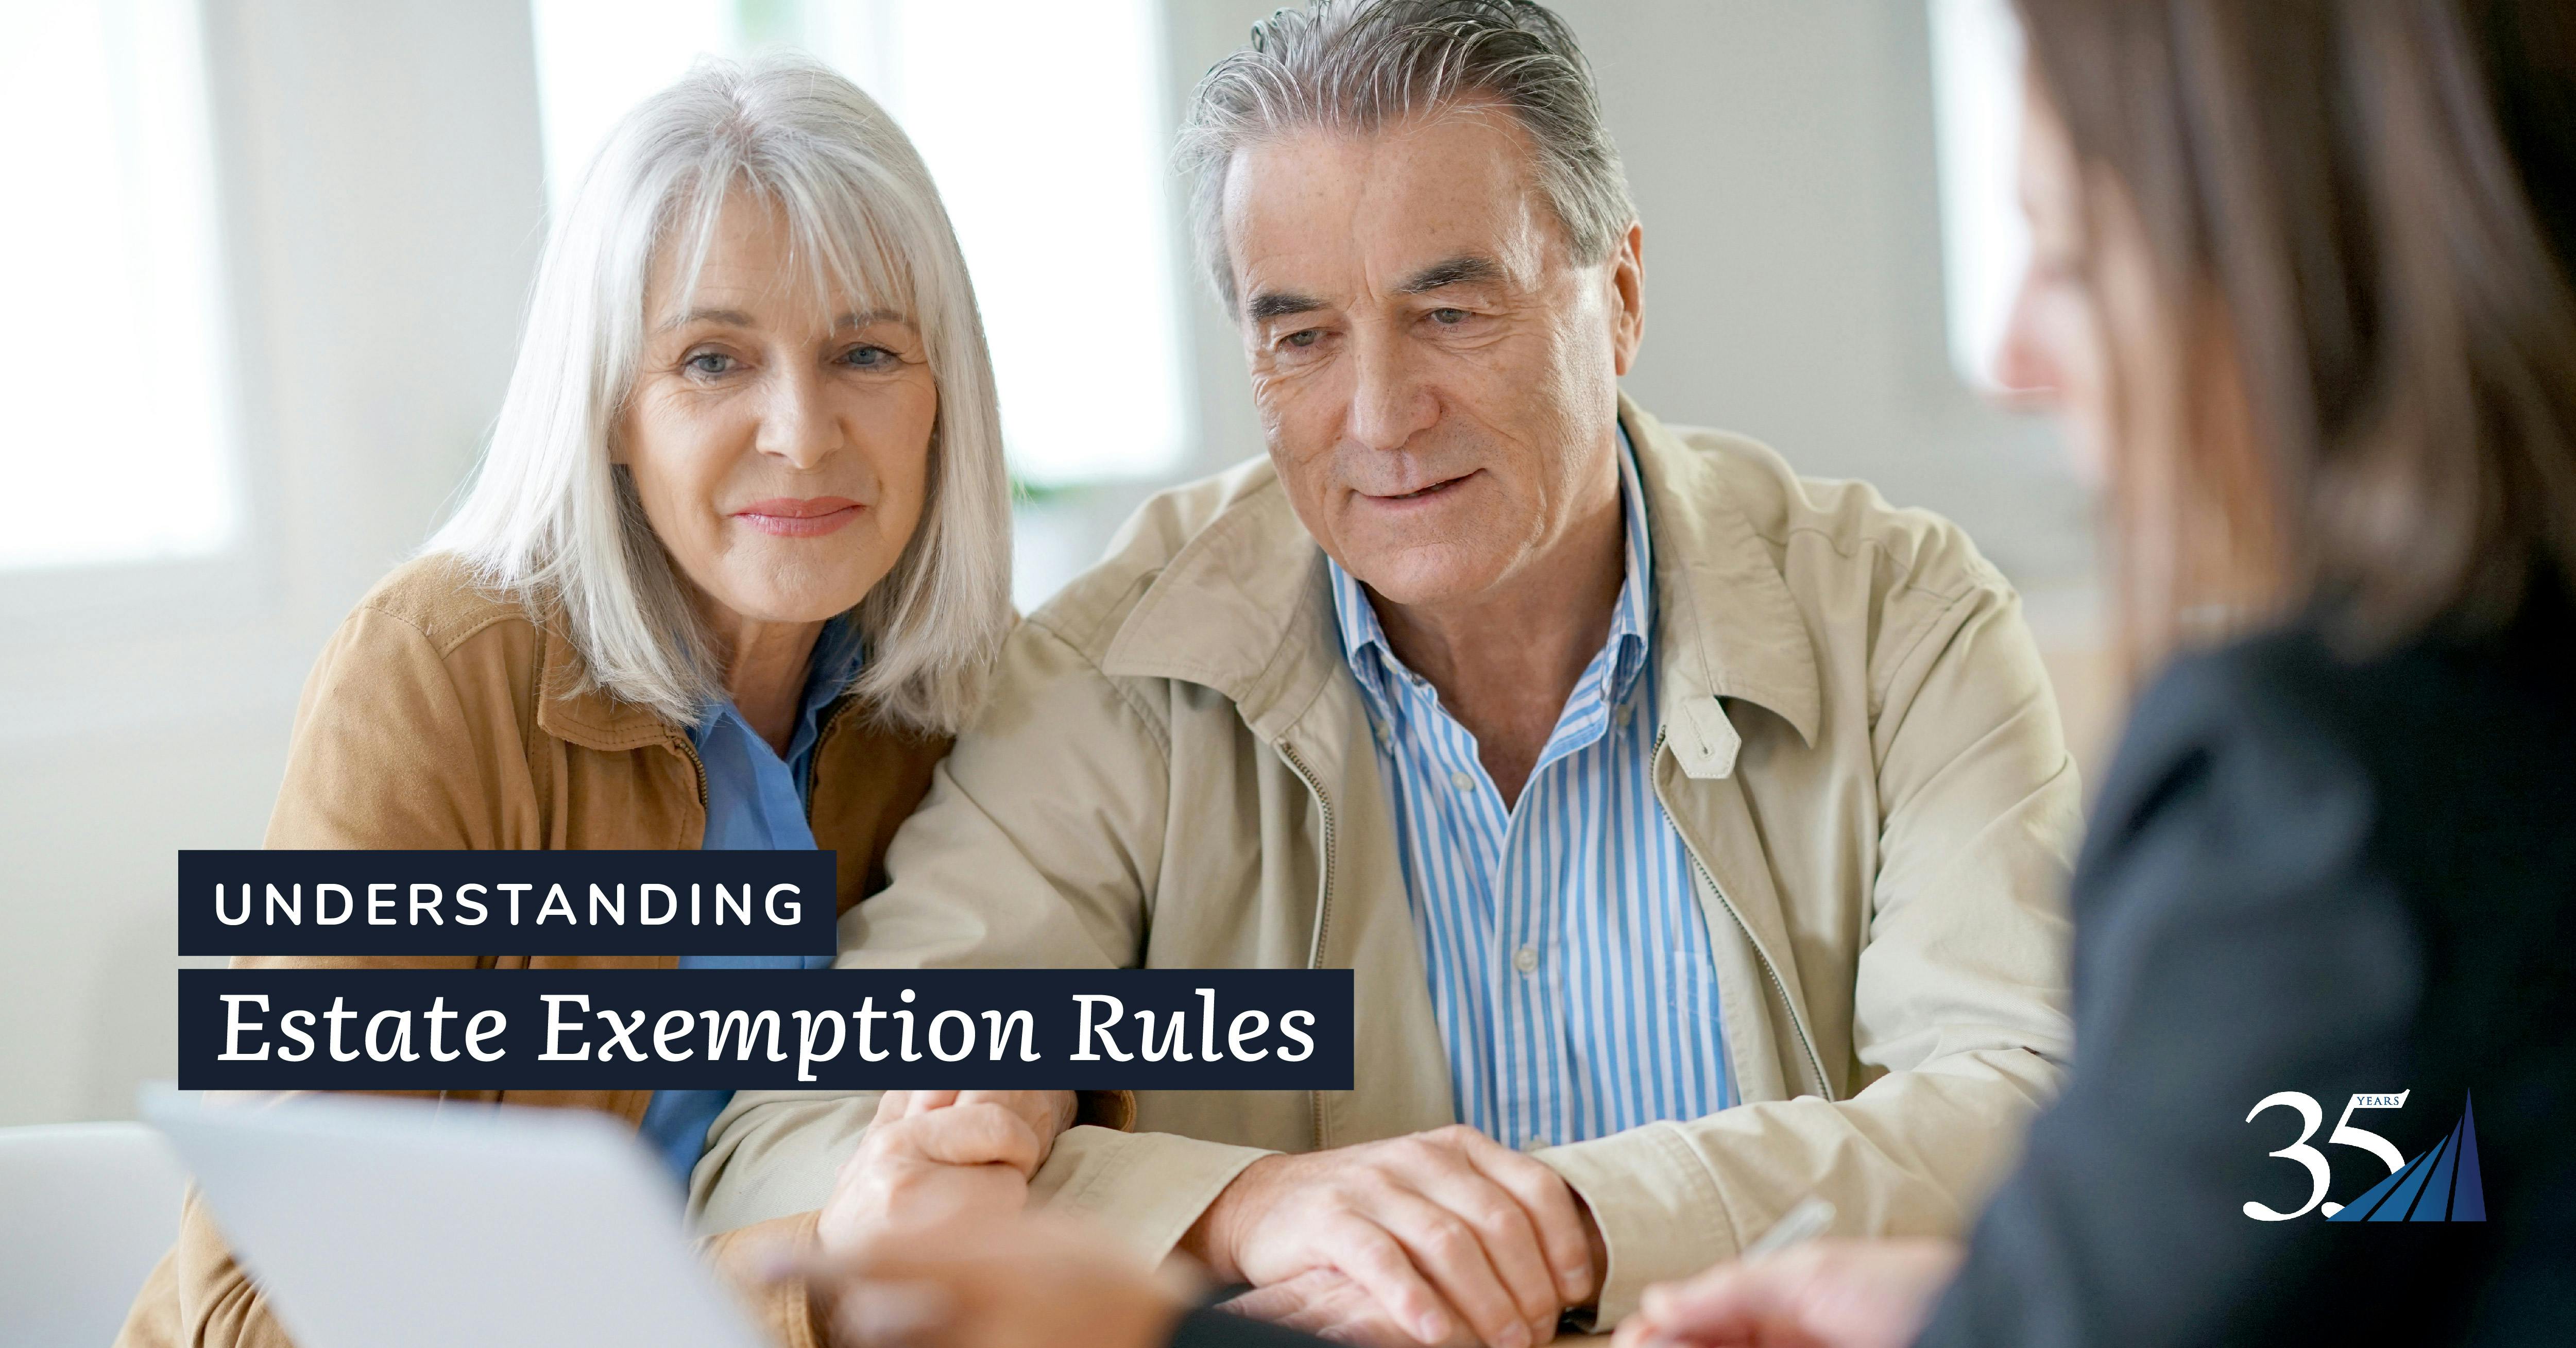 Understanding Estate Exemption Rules event